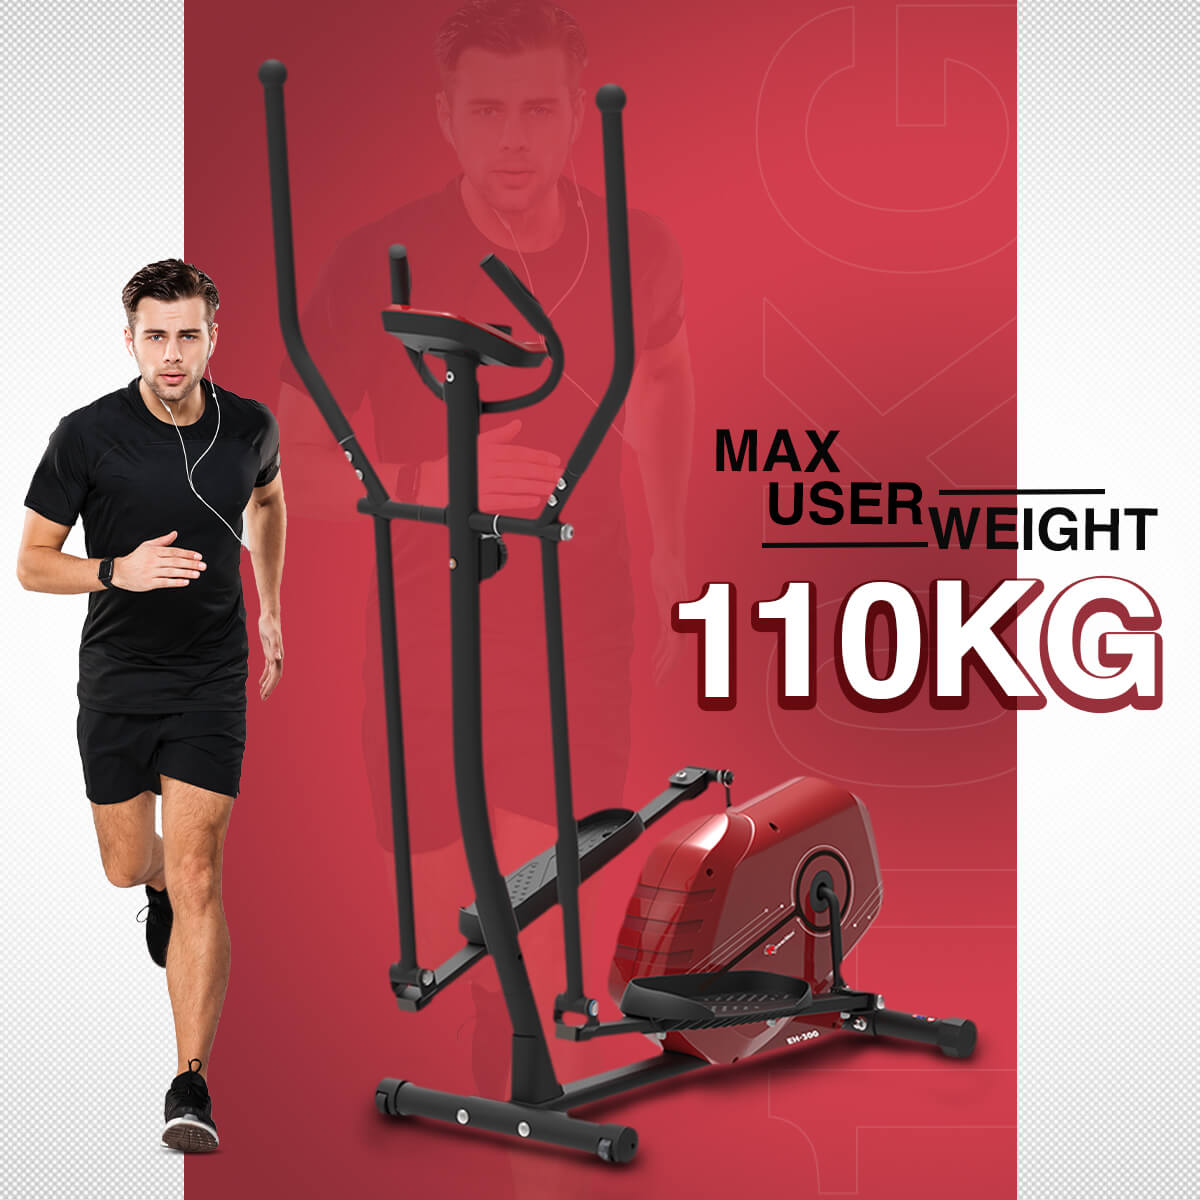 Buy Powermax Fitness EH-300 Elliptical Cross Trainer with Hand Pulse